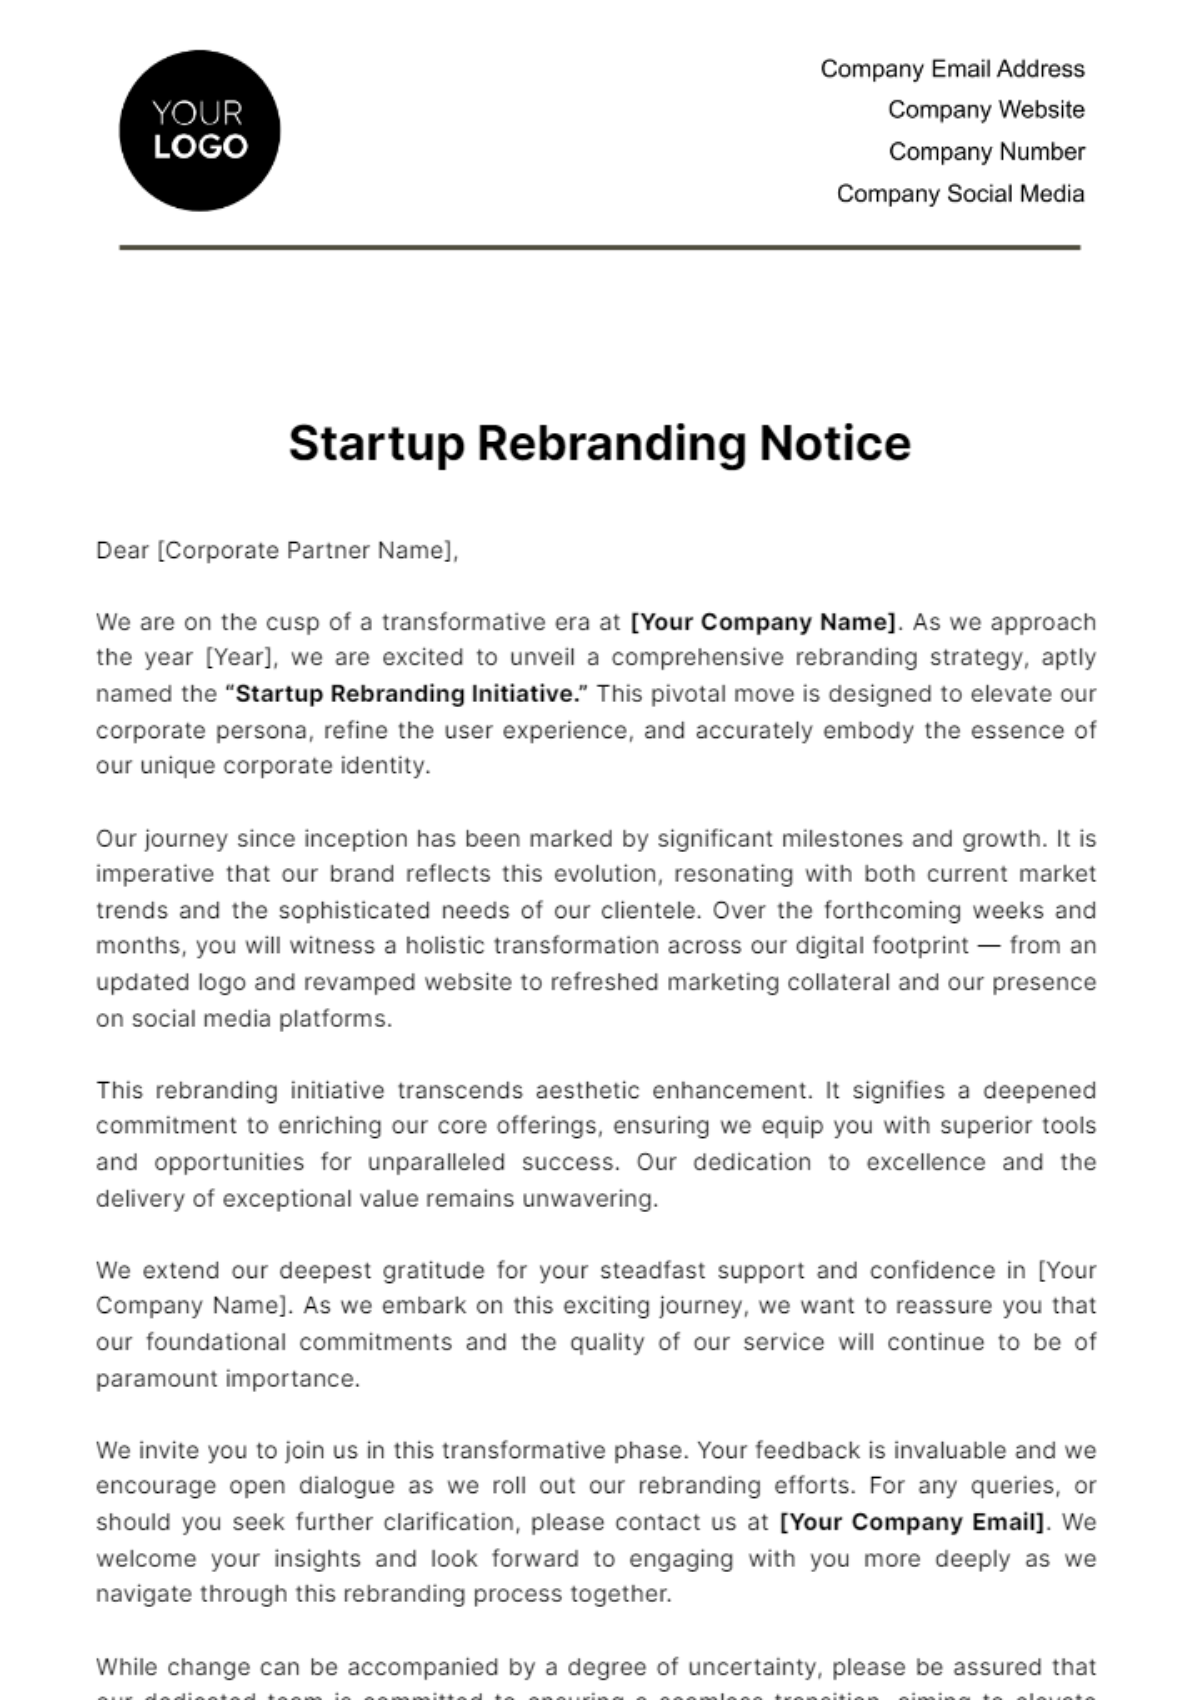 Startup Rebranding Notice Template